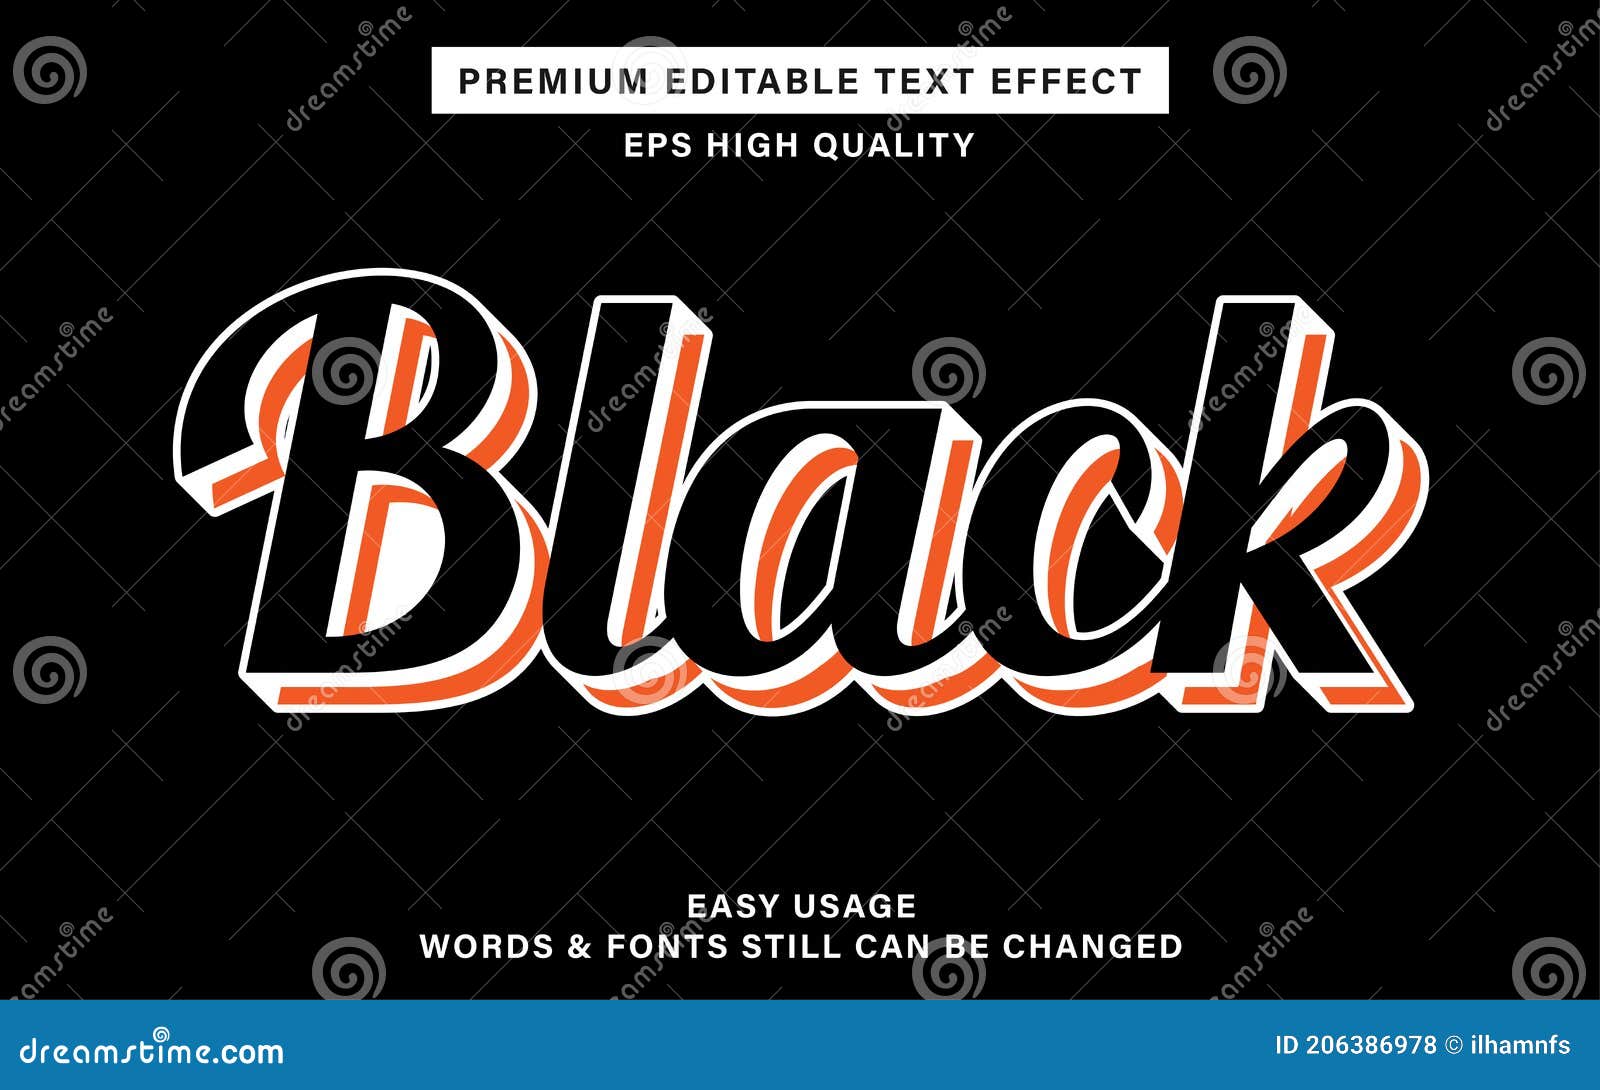 black editable text effect